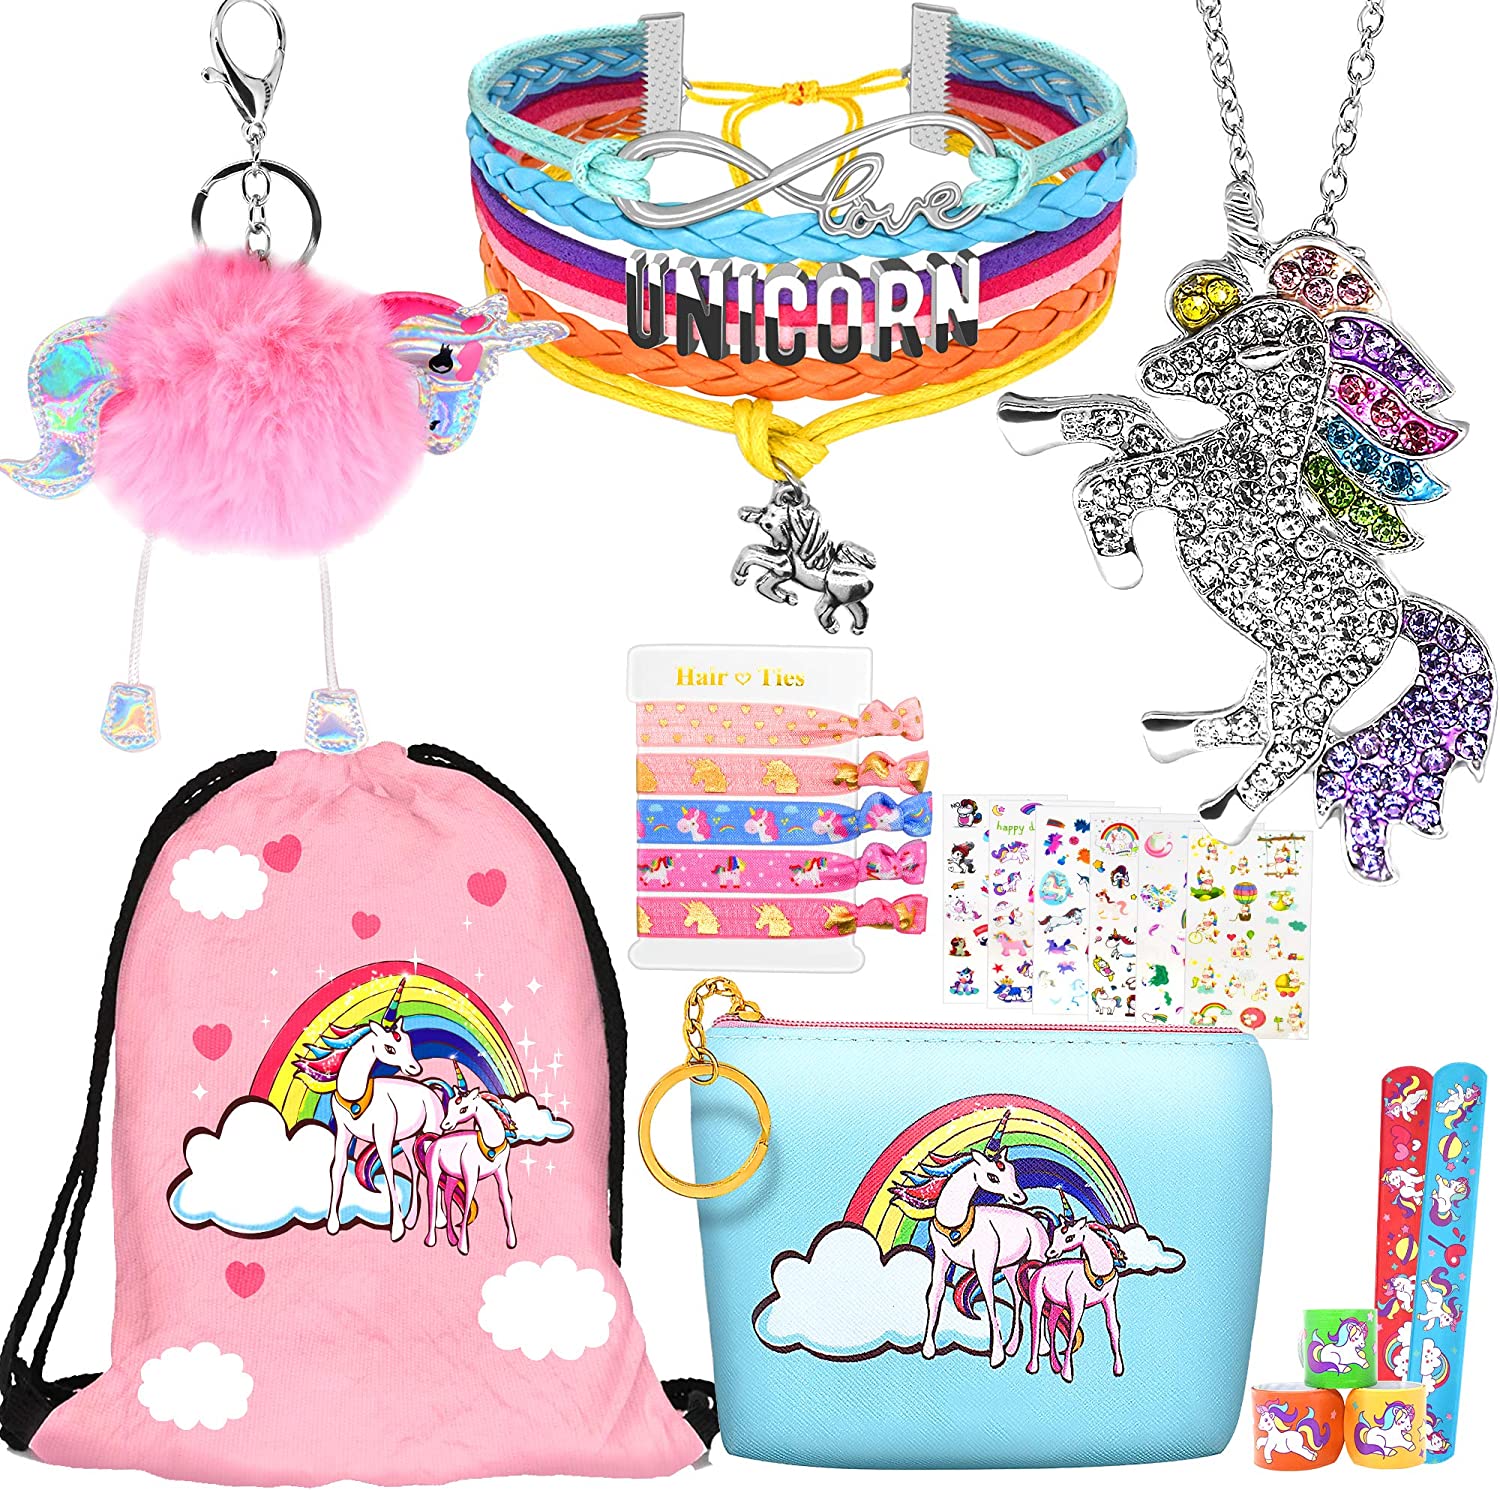 Hevout Children’s Assorted Unicorn Gifts, 8-Piece